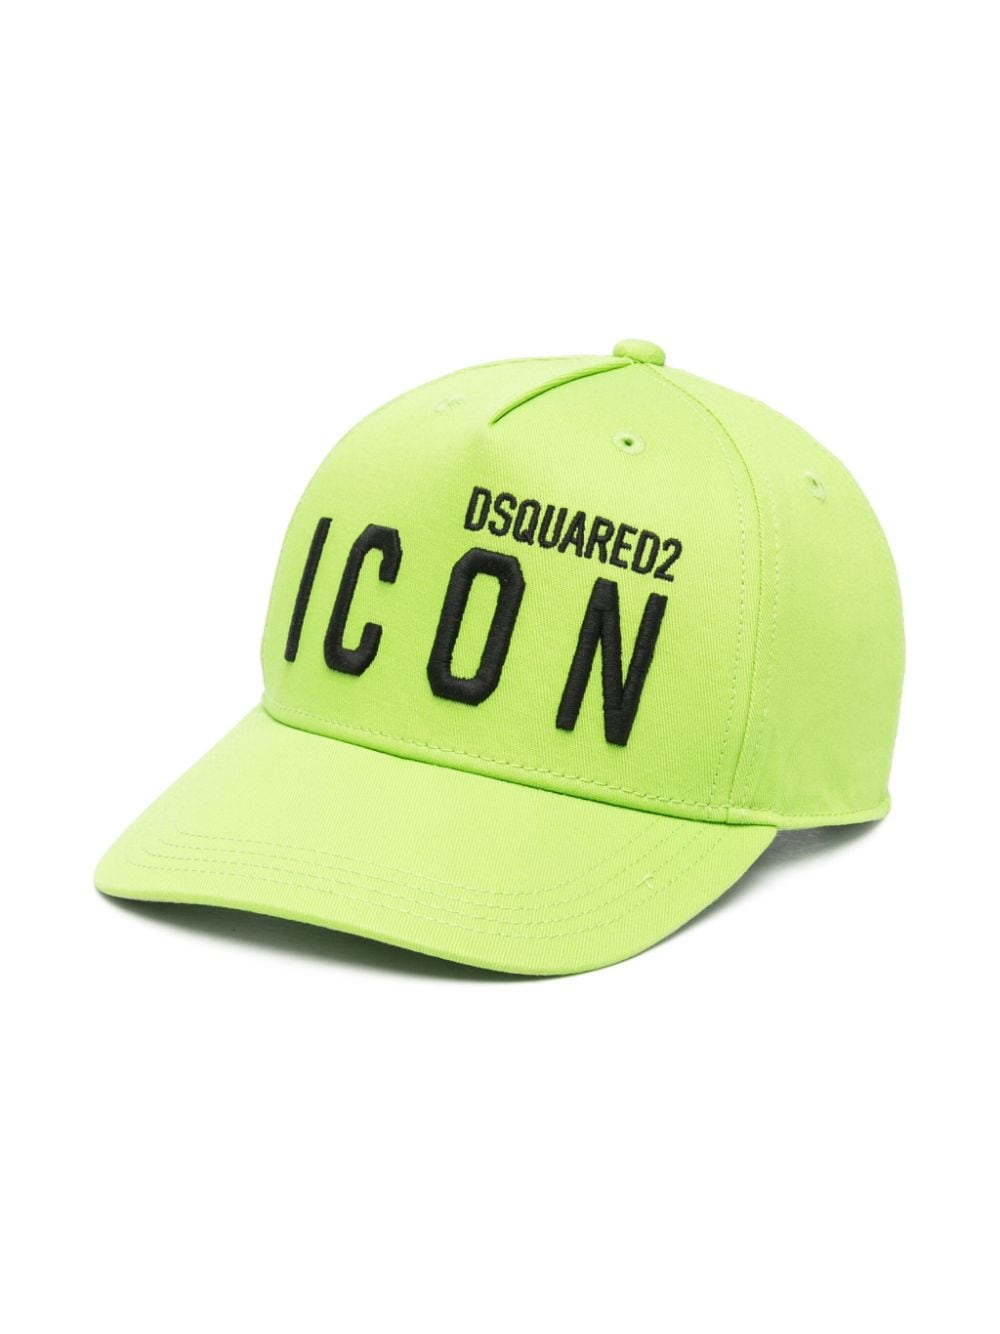 Green ICON hat for children